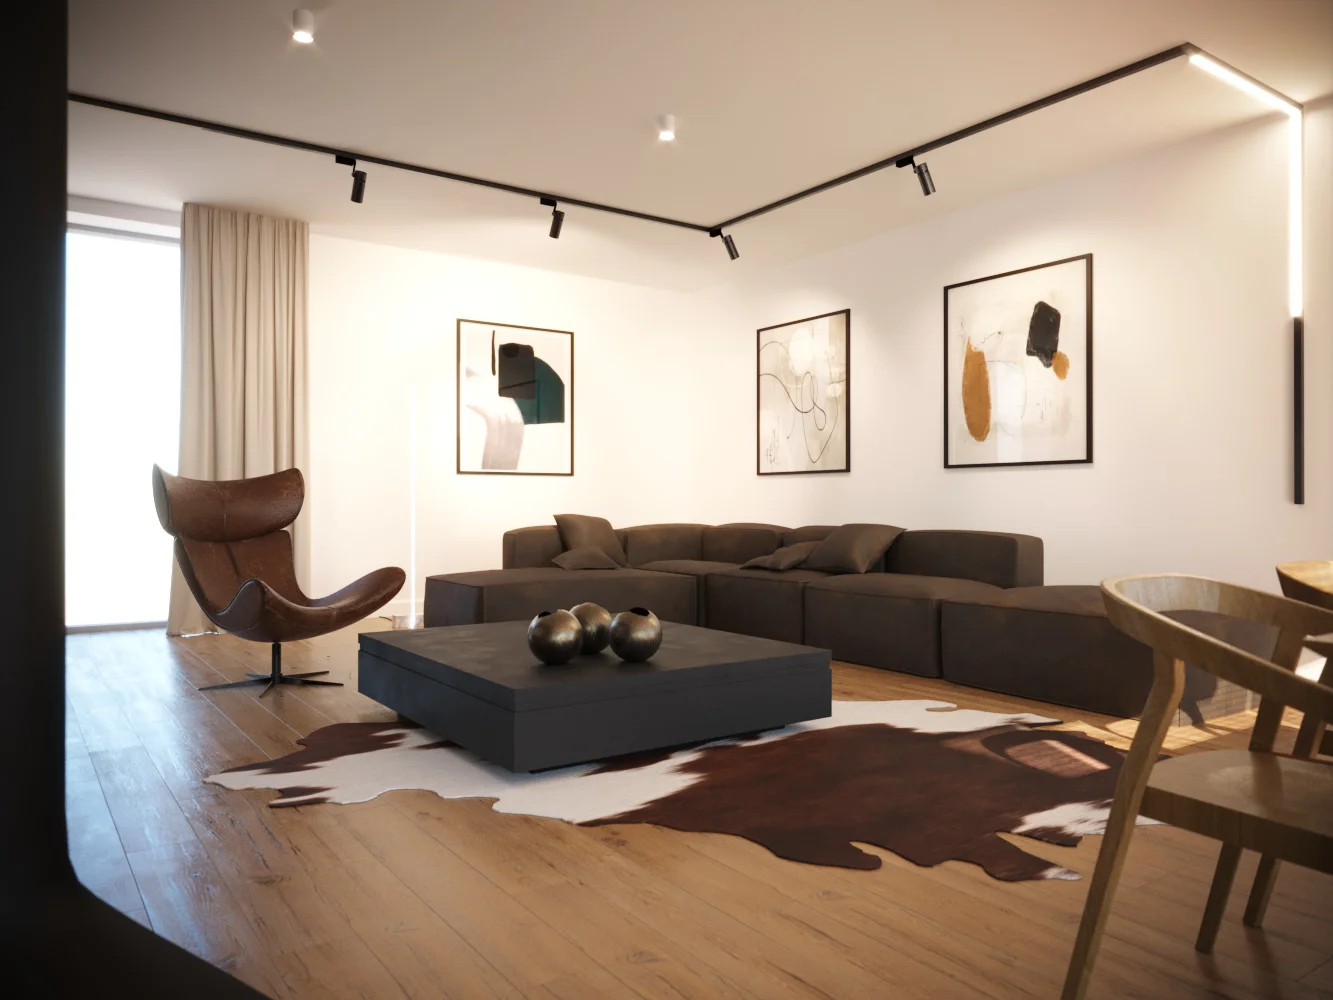 homfi project Wola Justowska living room 2